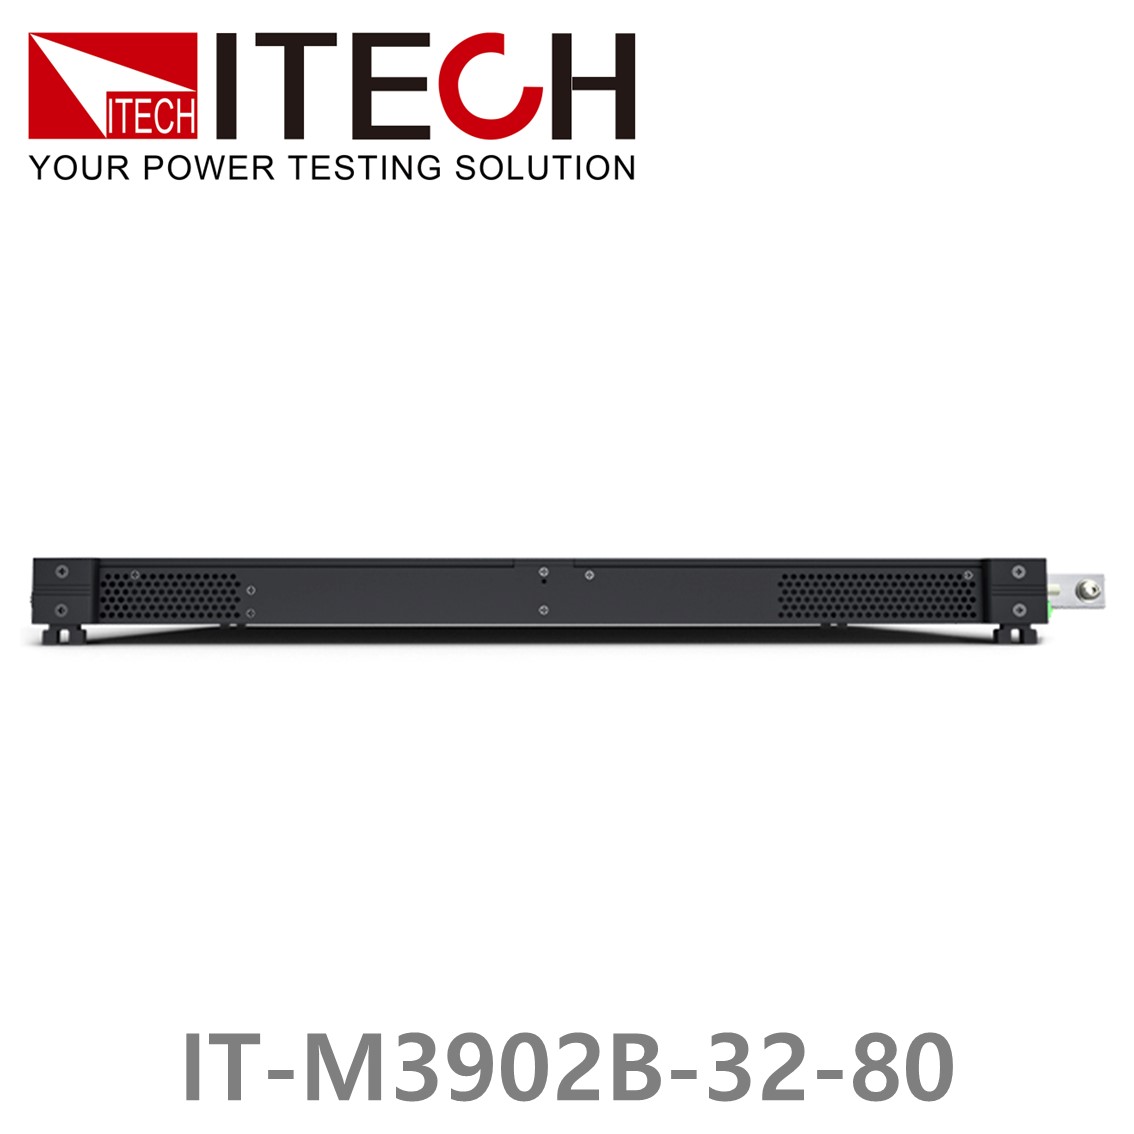 [ ITECH ] IT-M3902B-32-80  회생전력시스템,양방향DC파워 32V/±80A, ±2kW